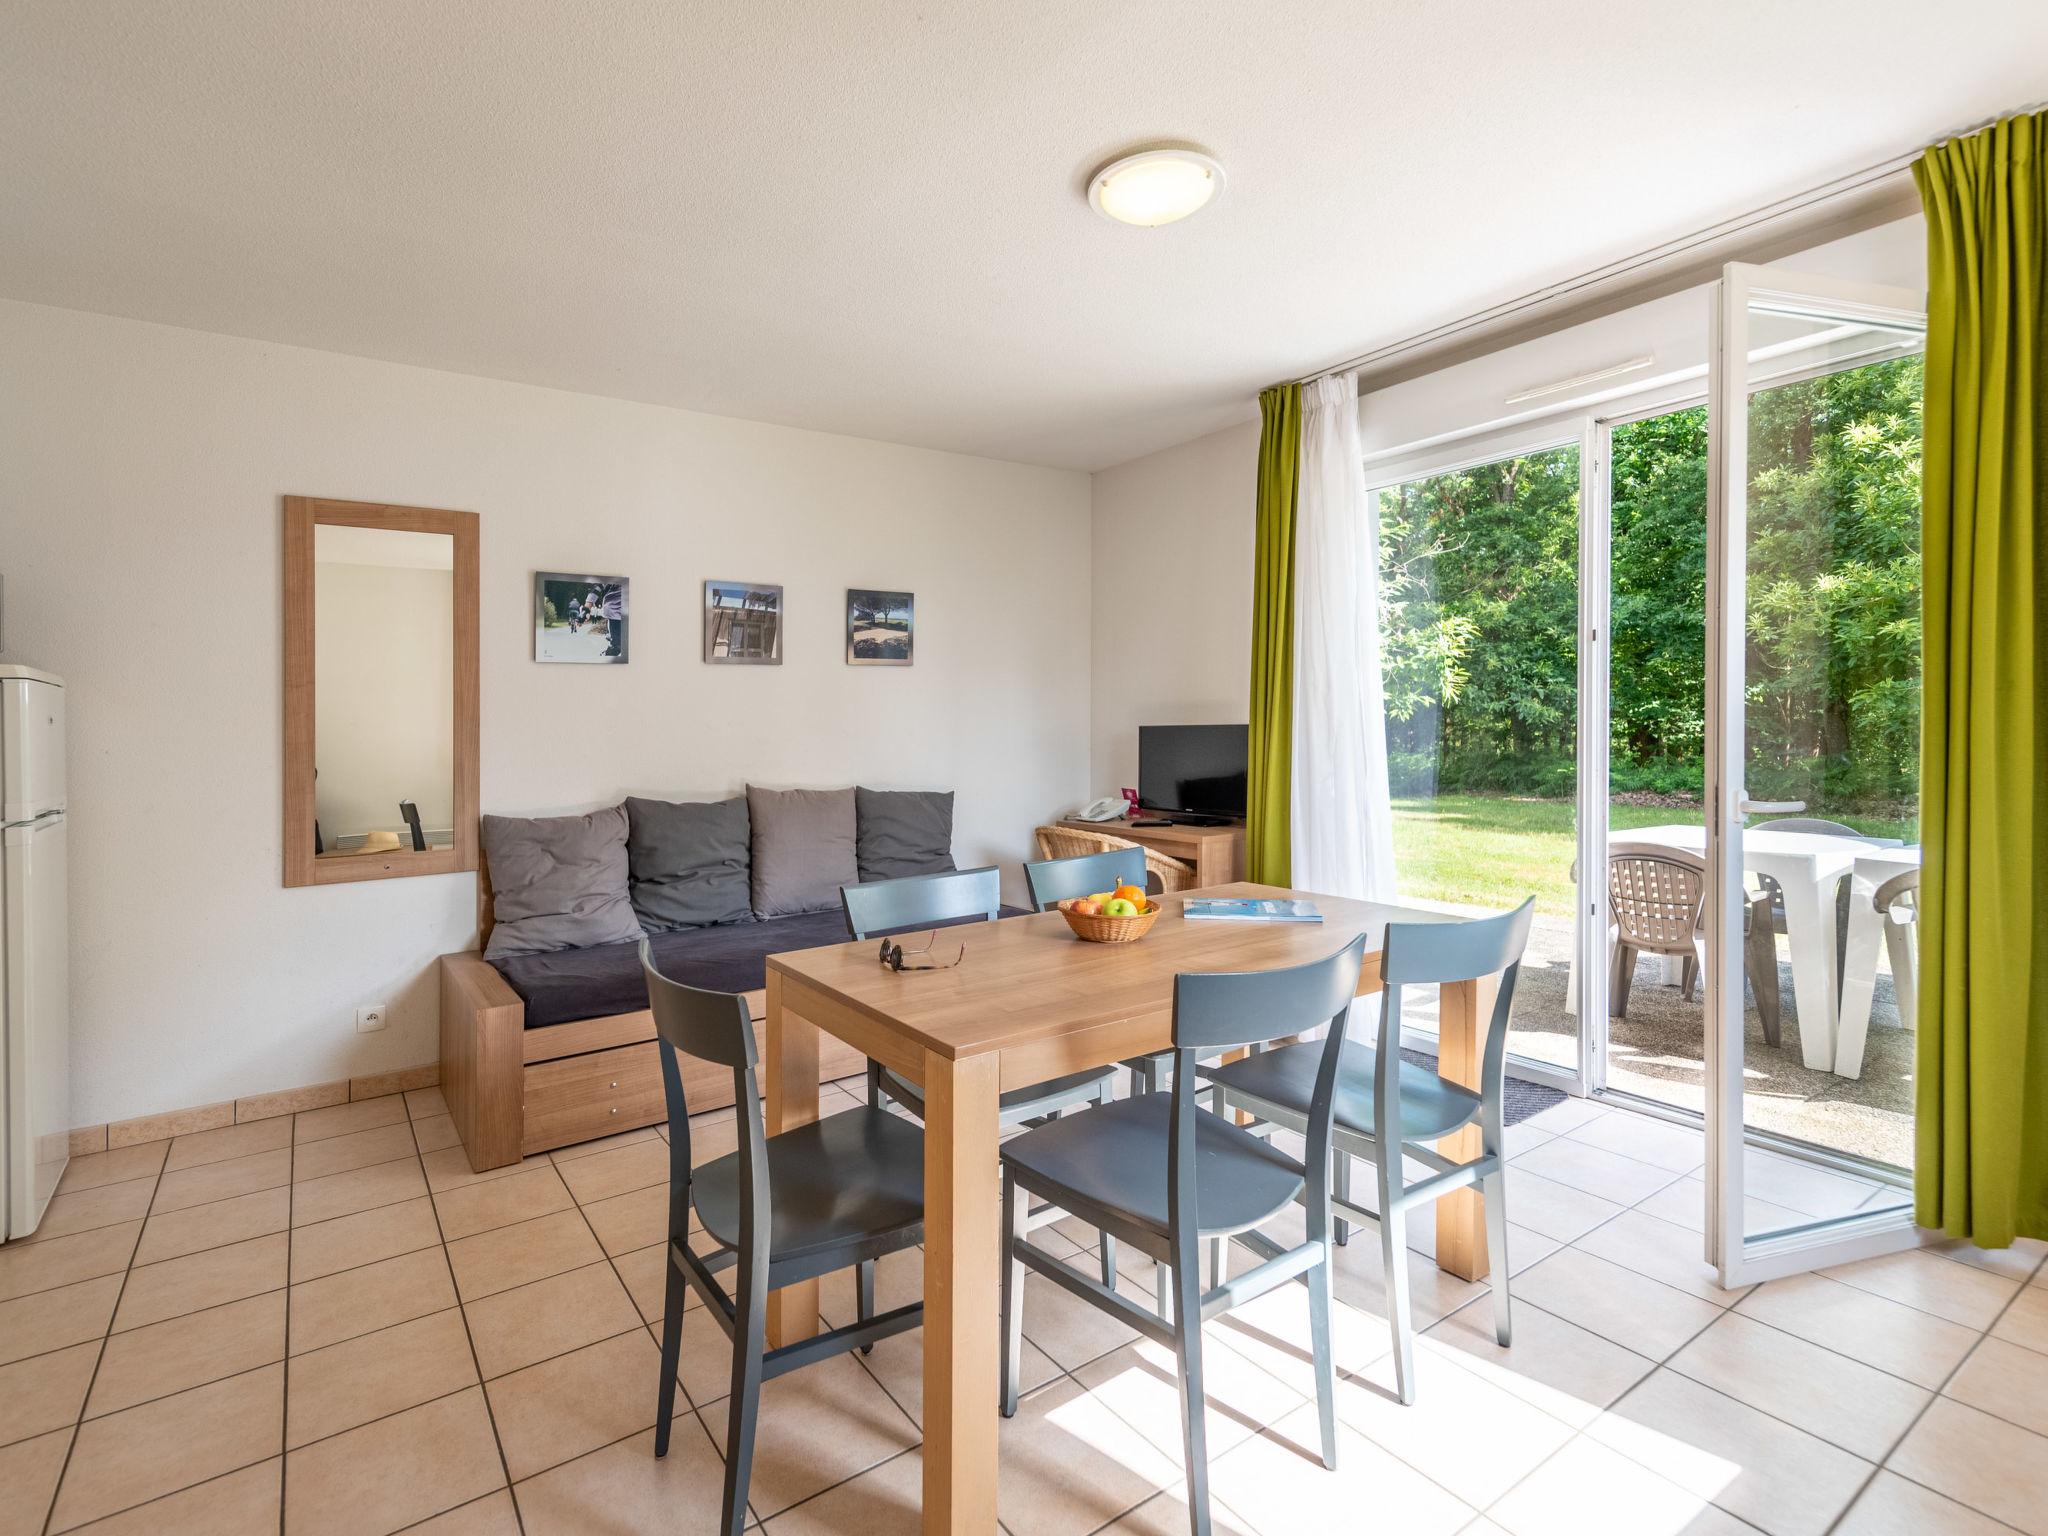 Foto 1 - Casa con 1 camera da letto a Saumur con piscina e giardino